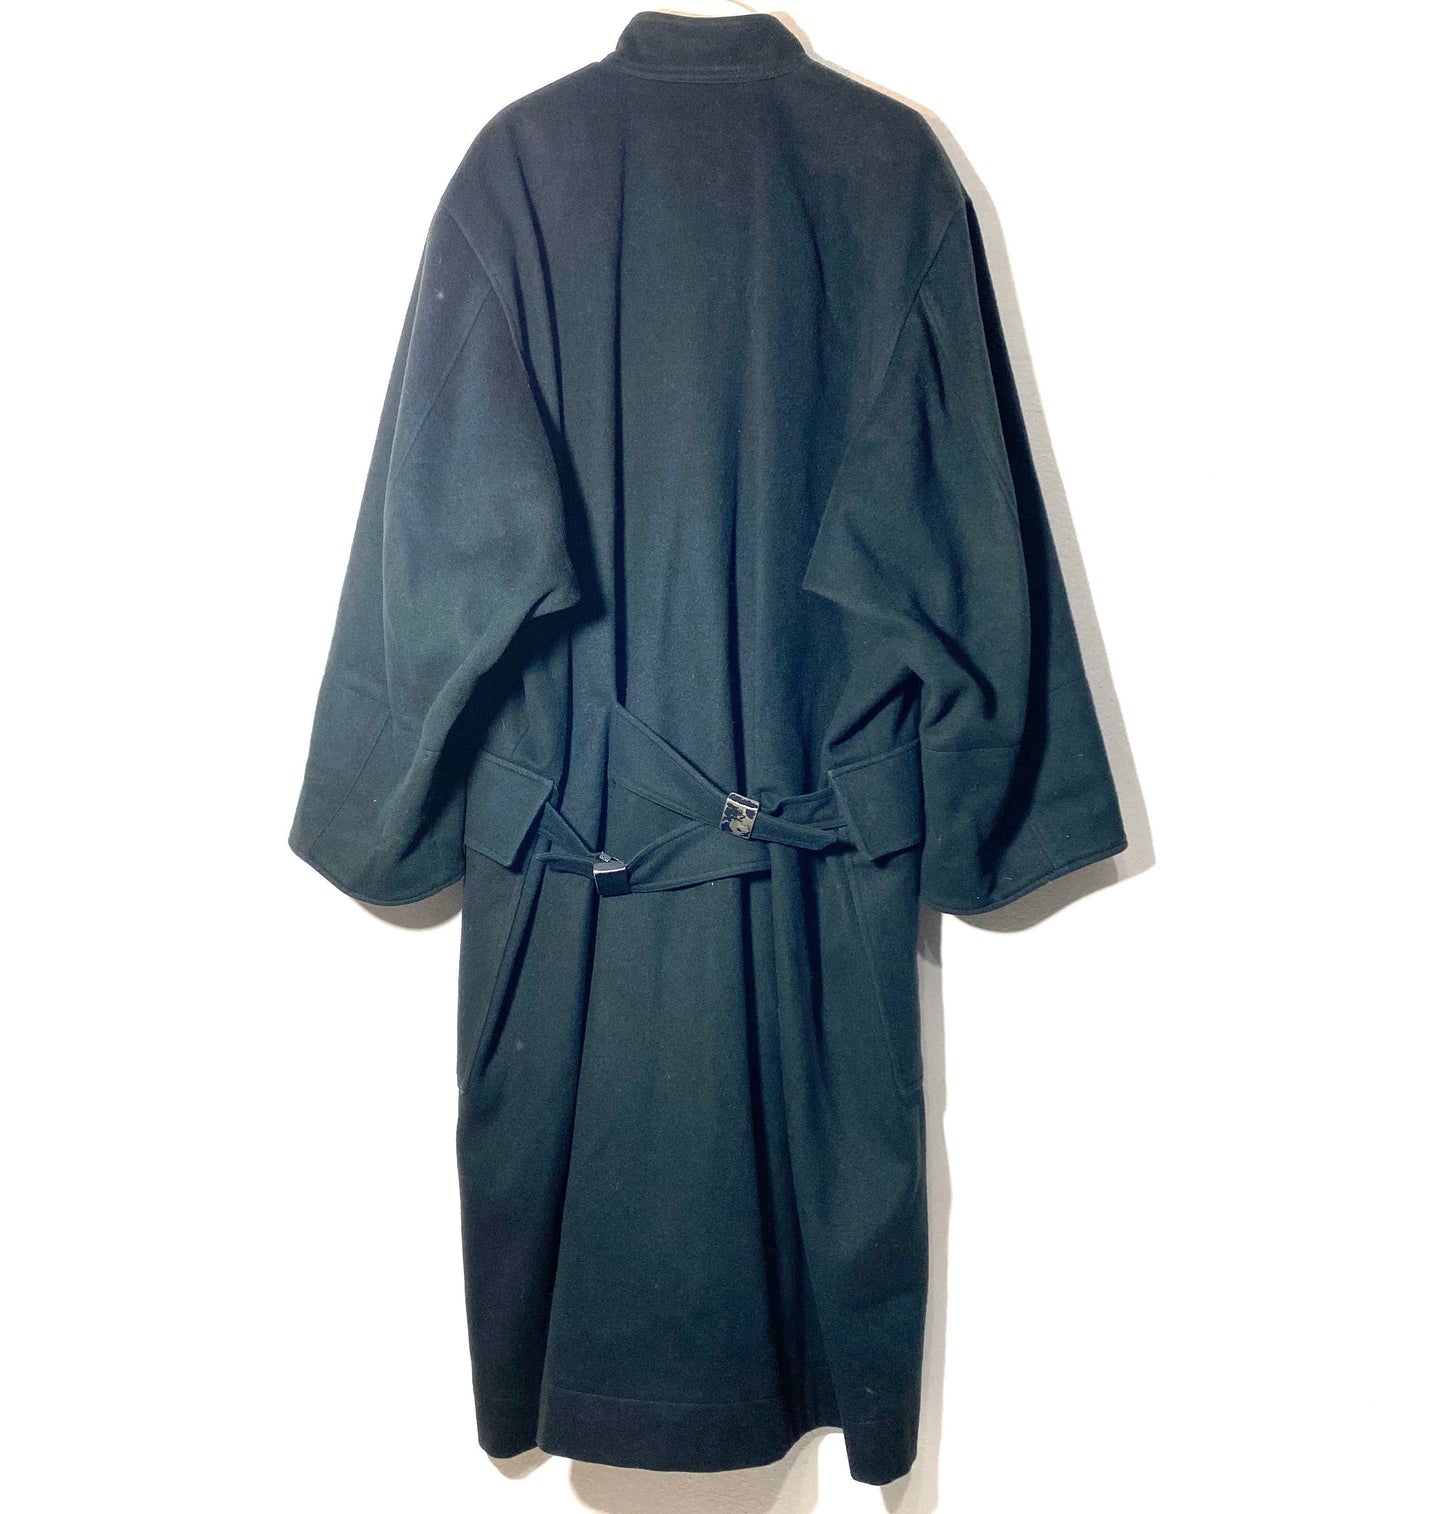 Alaia Paris vintage 80s petrol green wool coat, mint condition